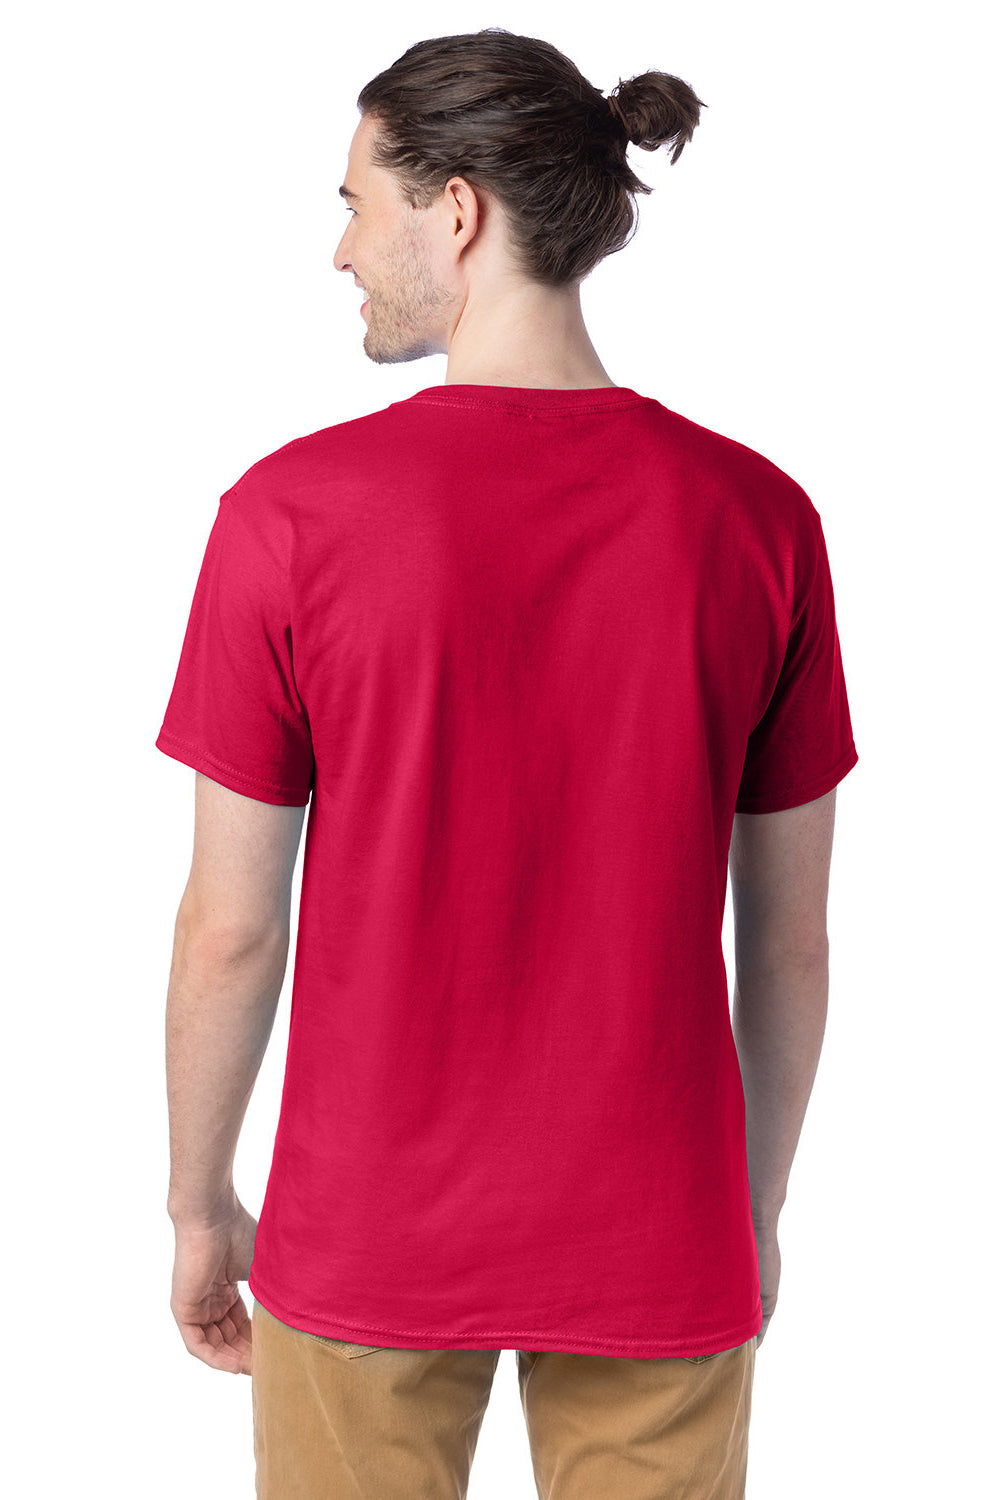 Hanes 5280 Mens ComfortSoft Short Sleeve Crewneck T-Shirt Athletic Crimson Red Back